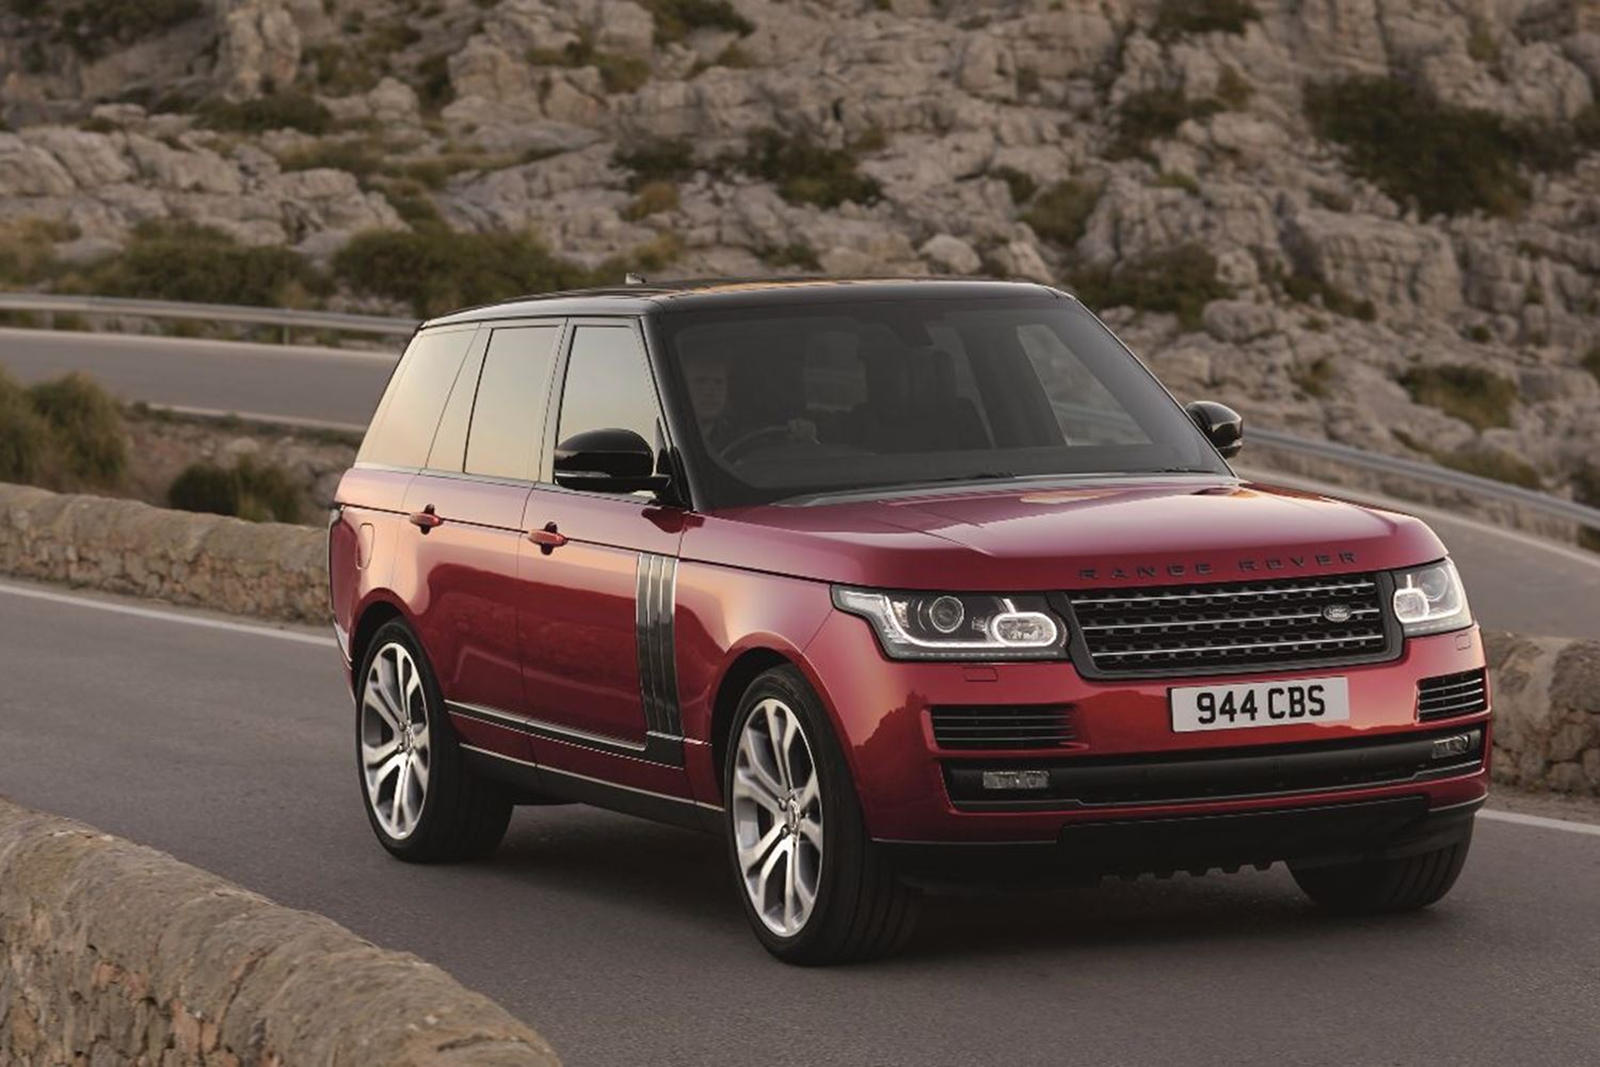 2017 Land Rover Range Rover Review Trims Specs Price New Interior